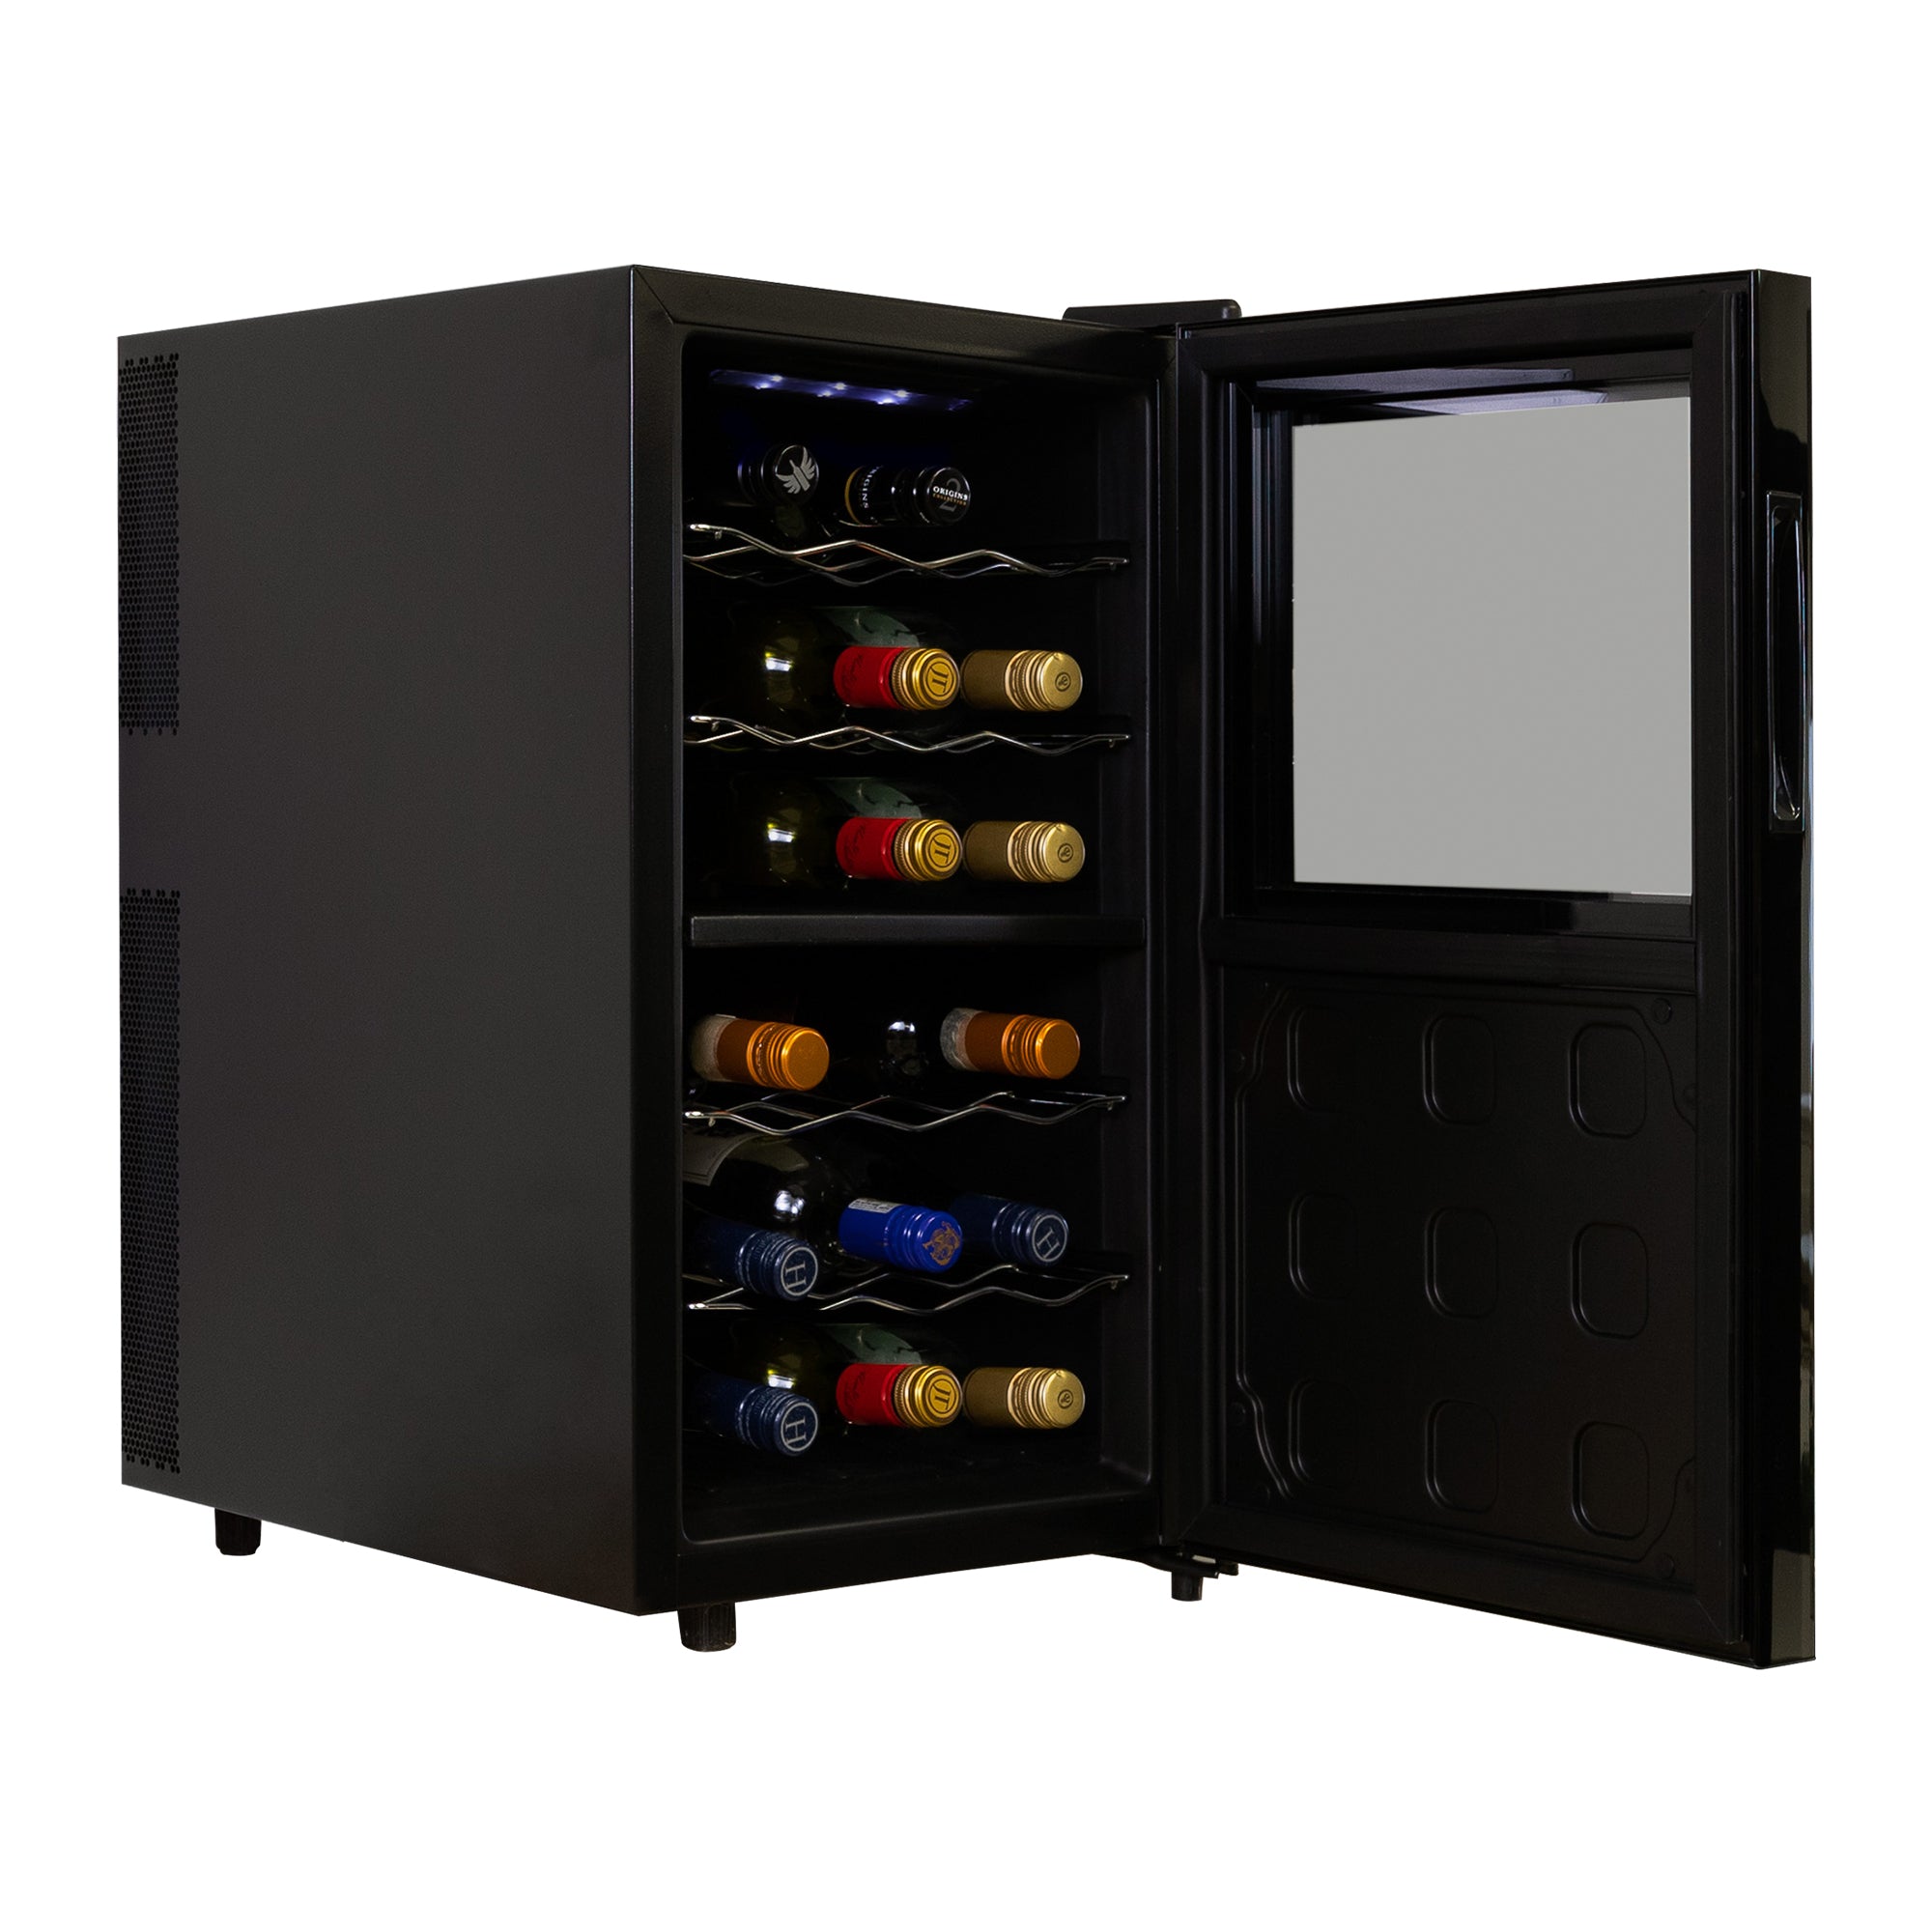 Koolatron 18 bottle wine cooler, open with bottles of wine inside, on a white background